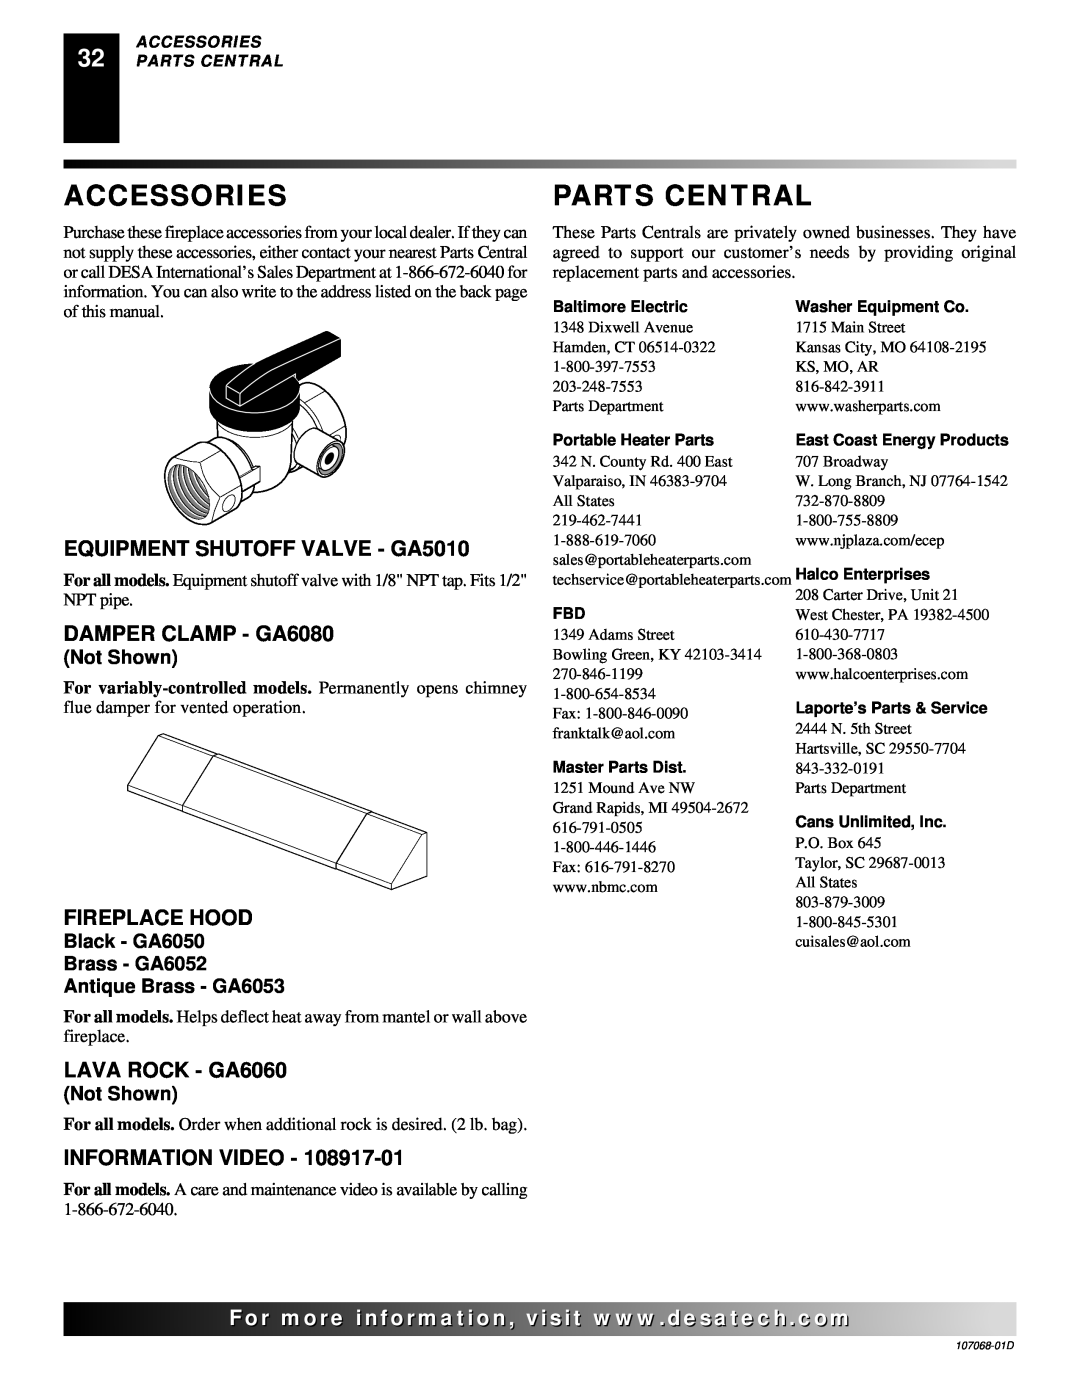 Desa CGS3124P Accessories, Parts Central, EQUIPMENT SHUTOFF VALVE - GA5010, DAMPER CLAMP - GA6080, Fireplace Hood 